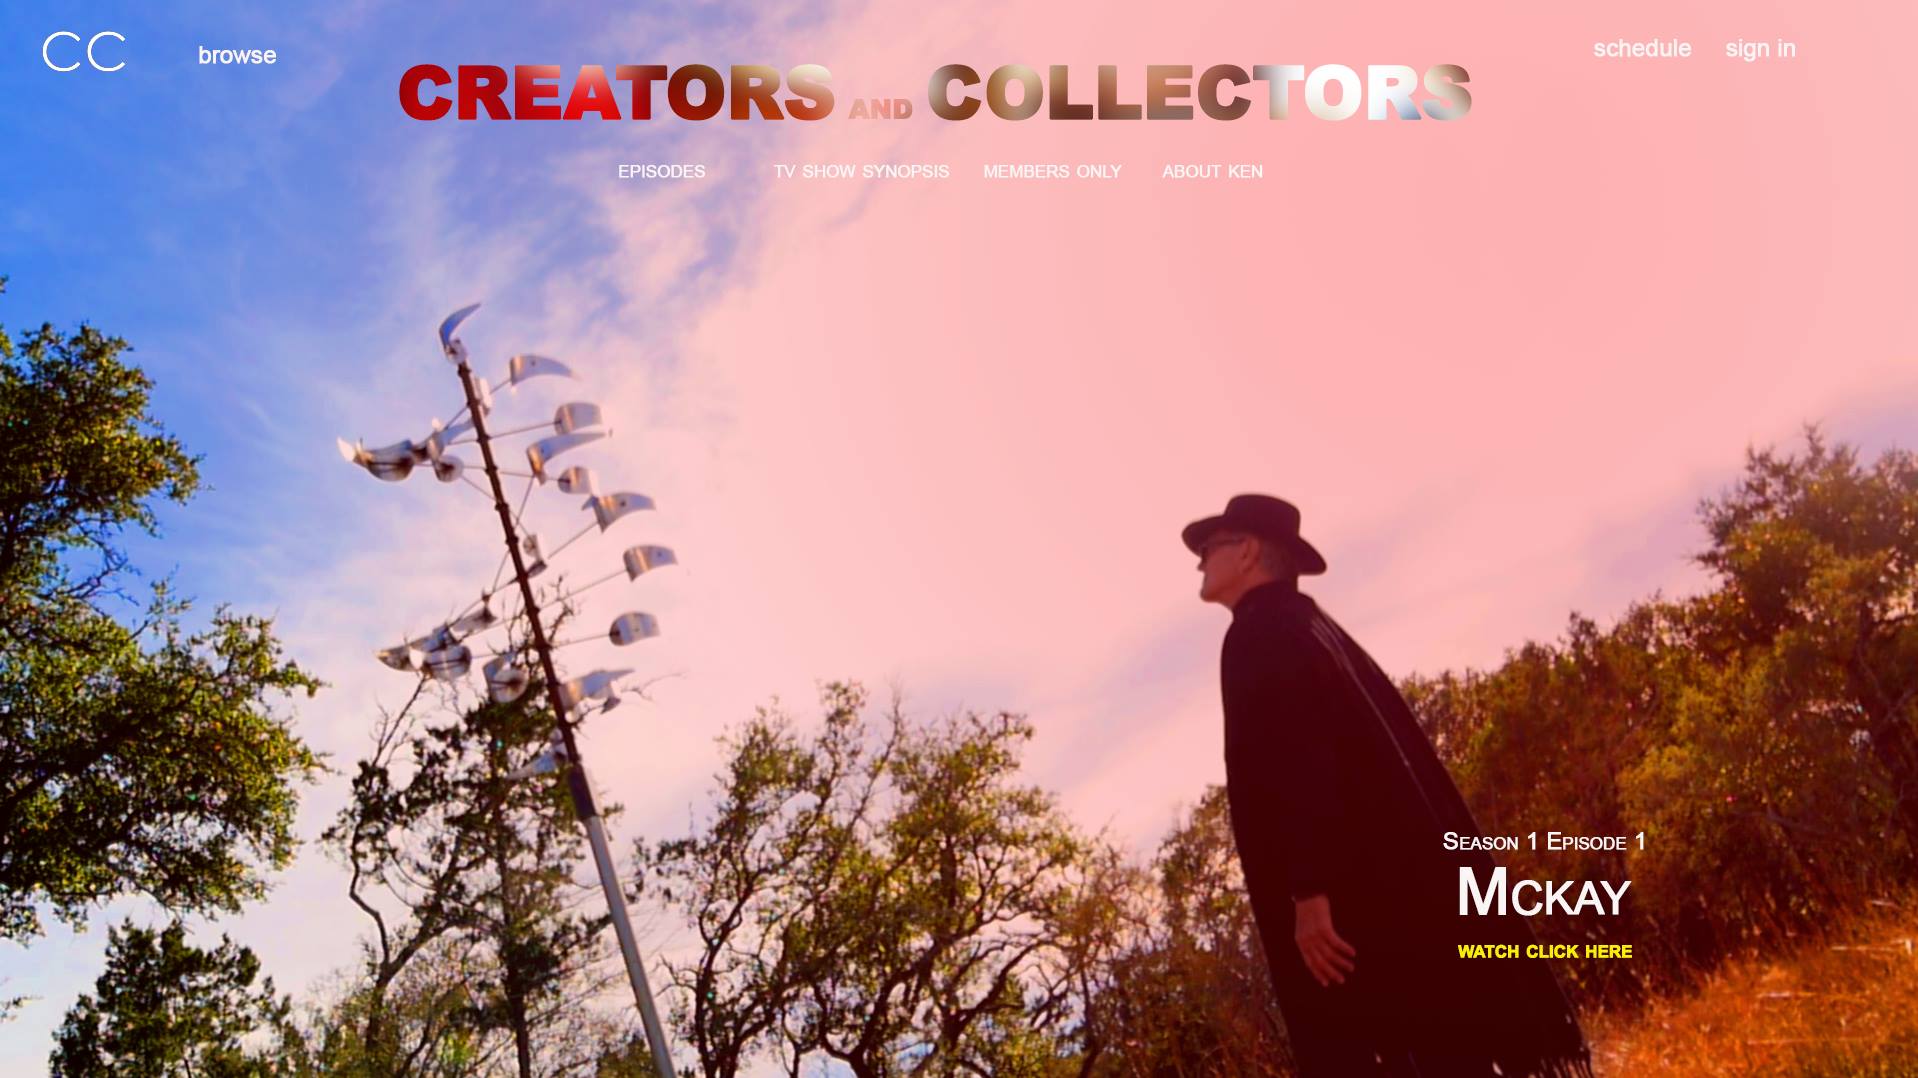 Creators and Collectors promo.jpg